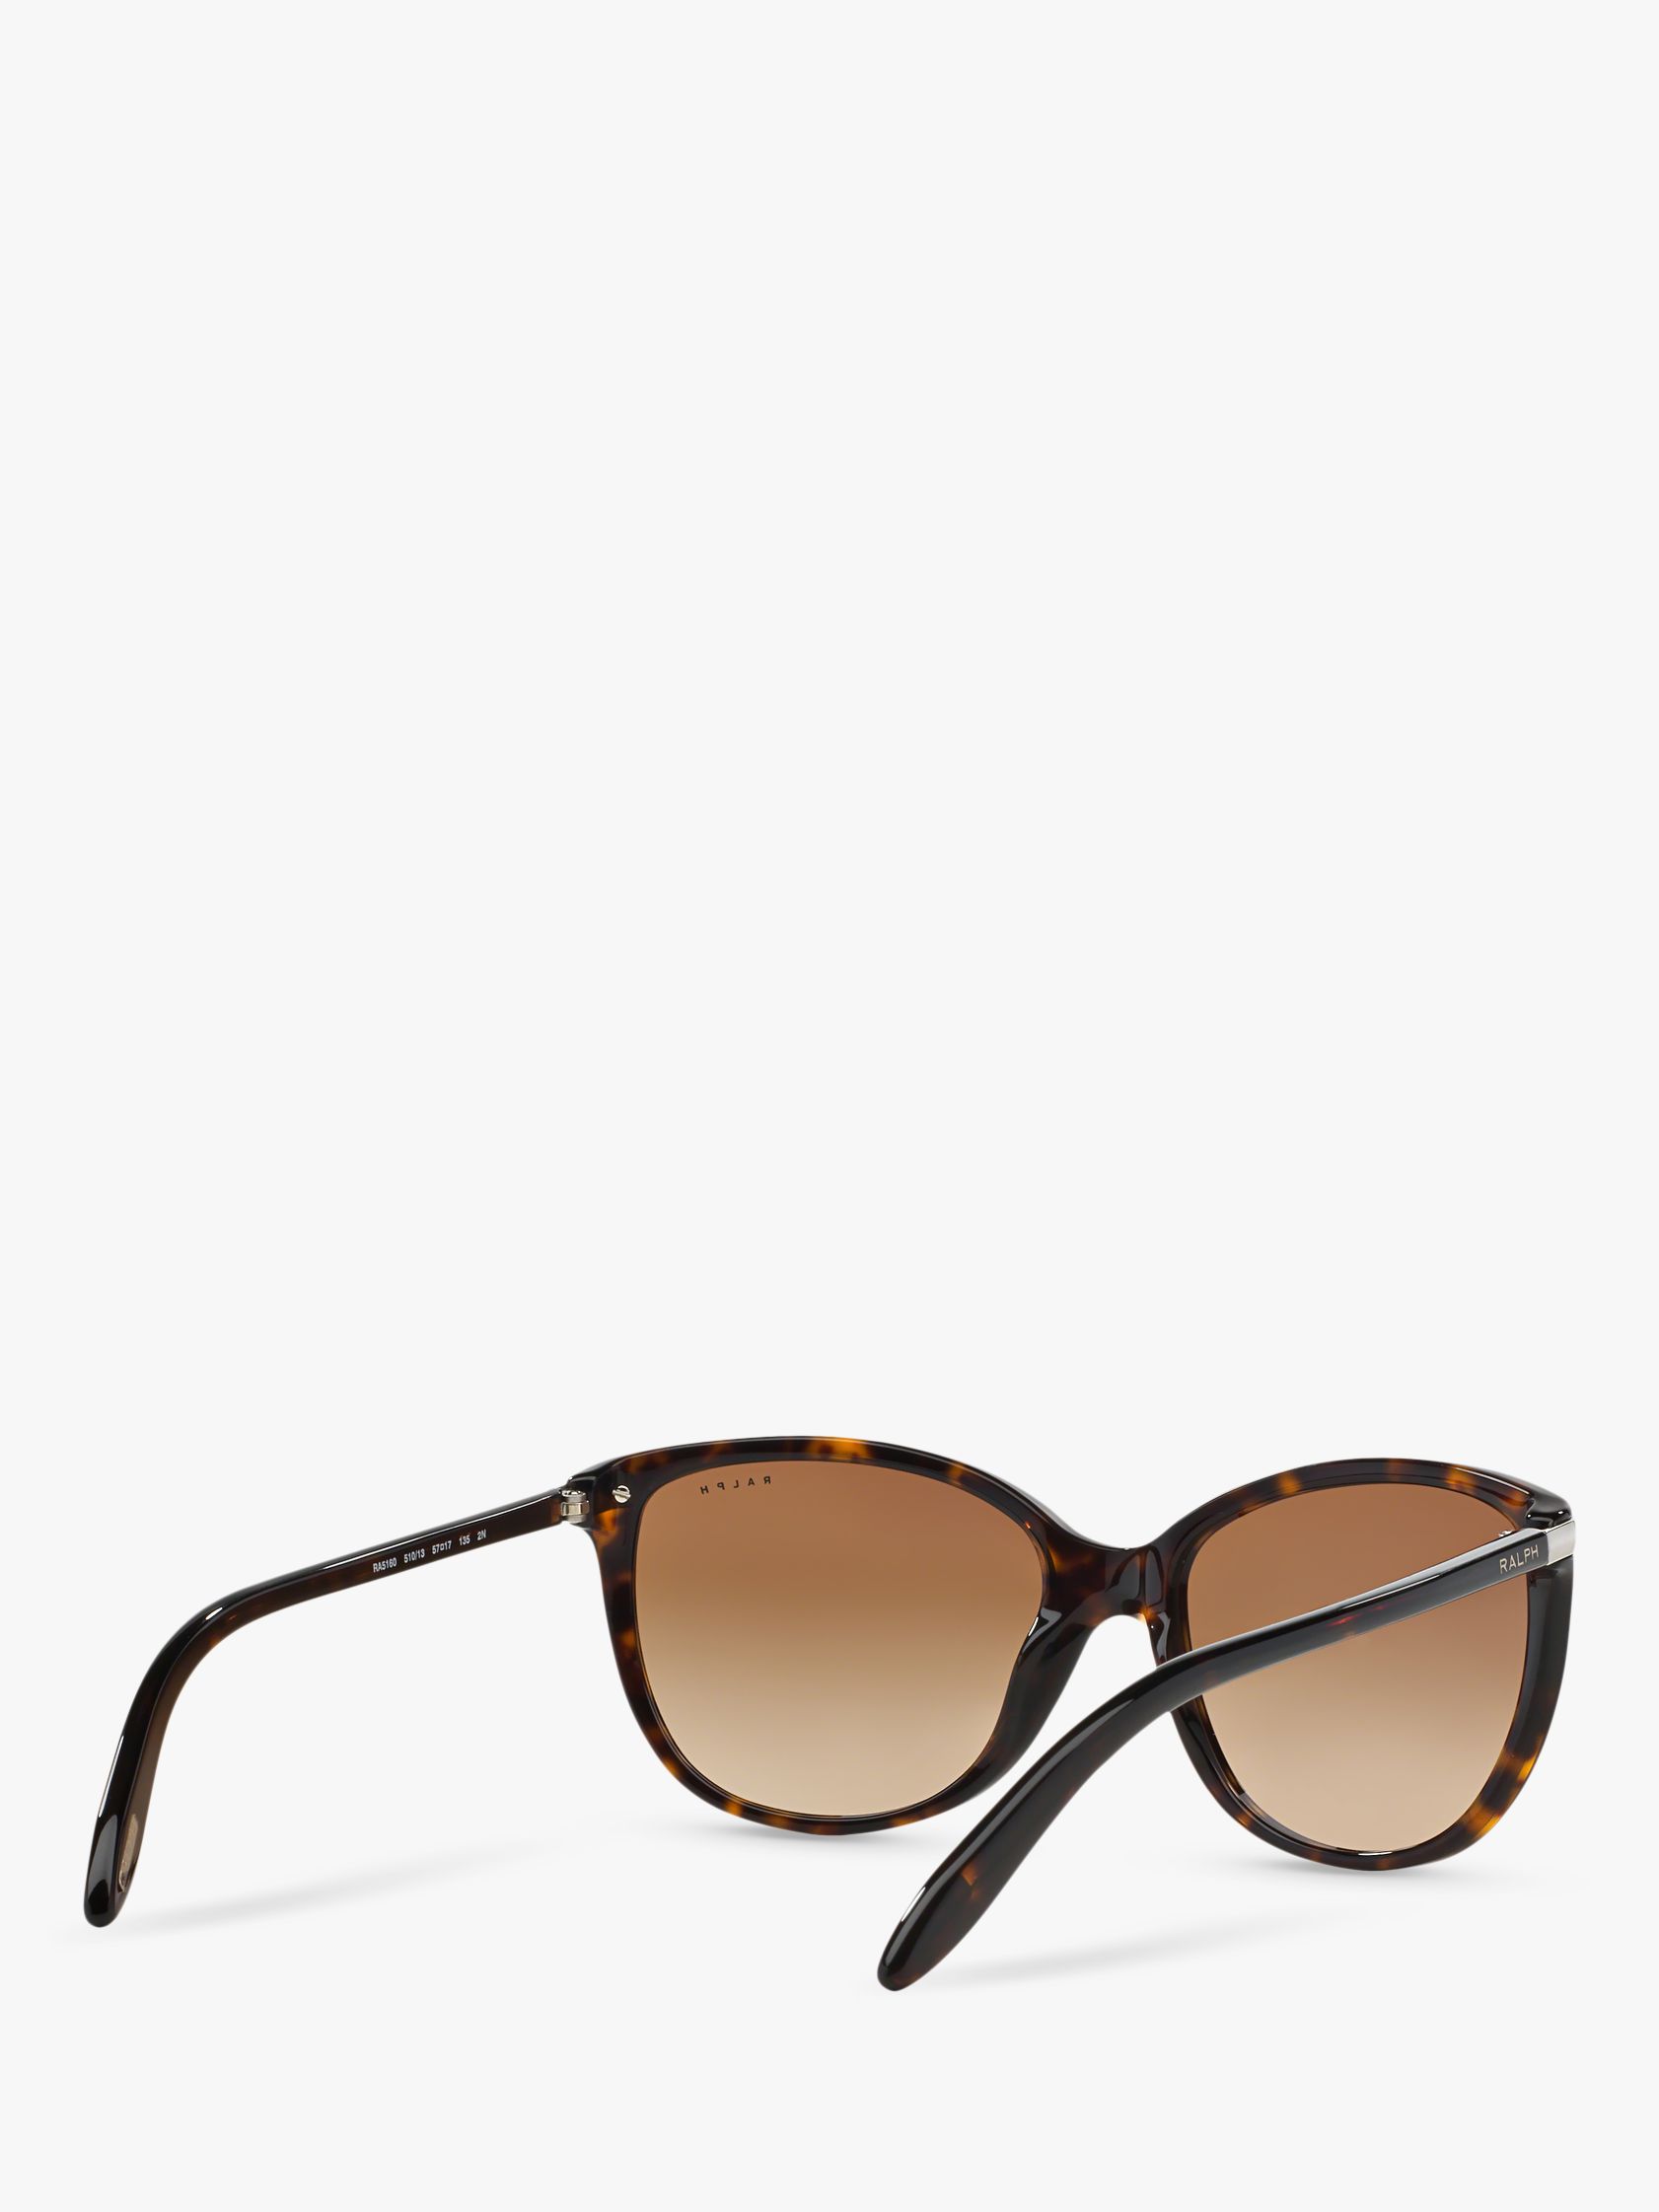 Polo Ralph Lauren RA5160 Women's Cat's Eye Sunglasses, Dark Tortoise ...